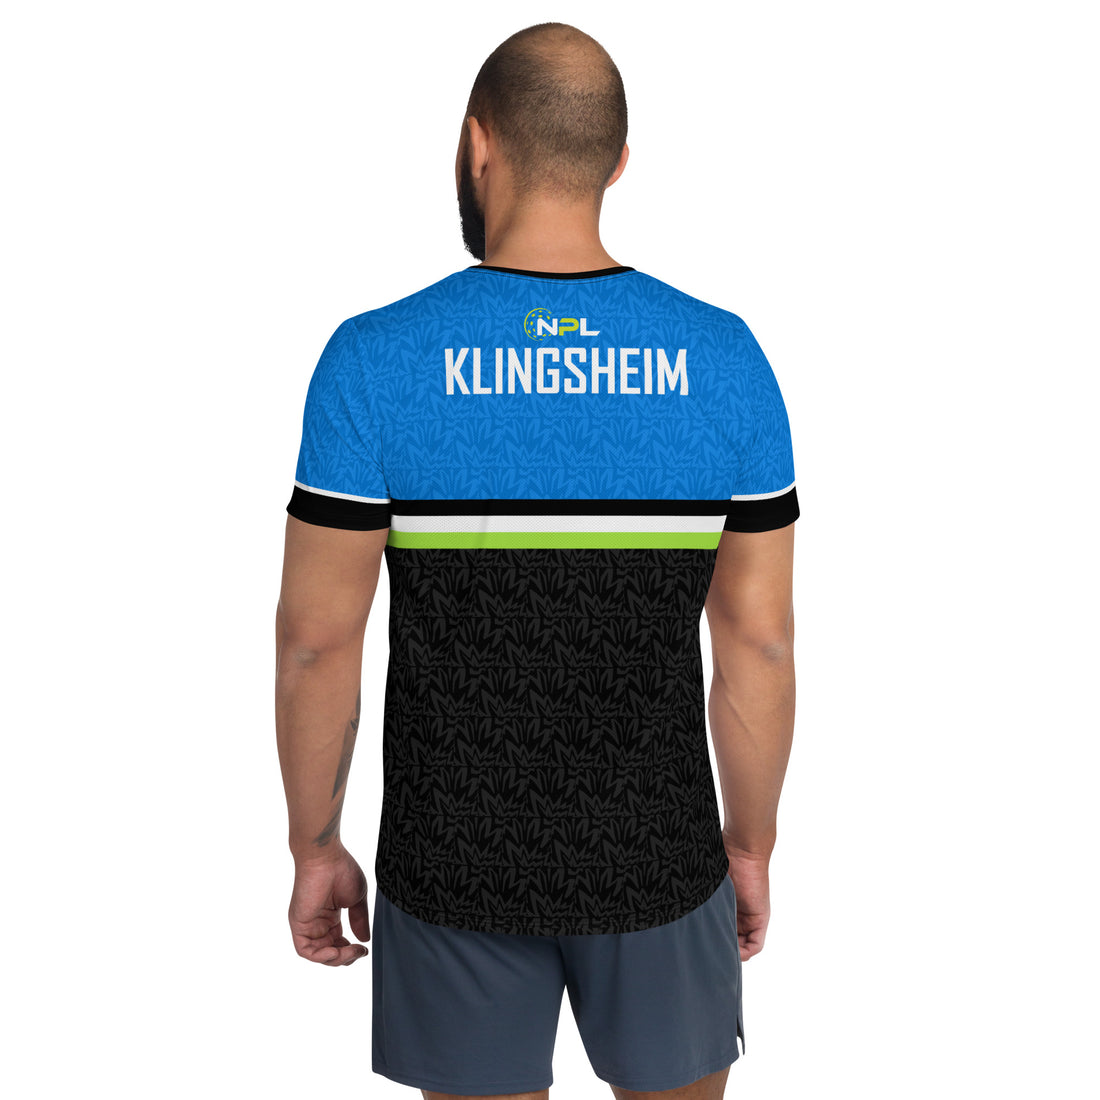 Peter Klingsheim OKC Punishers™ SKYblue™ Authentic Tournament Jersey